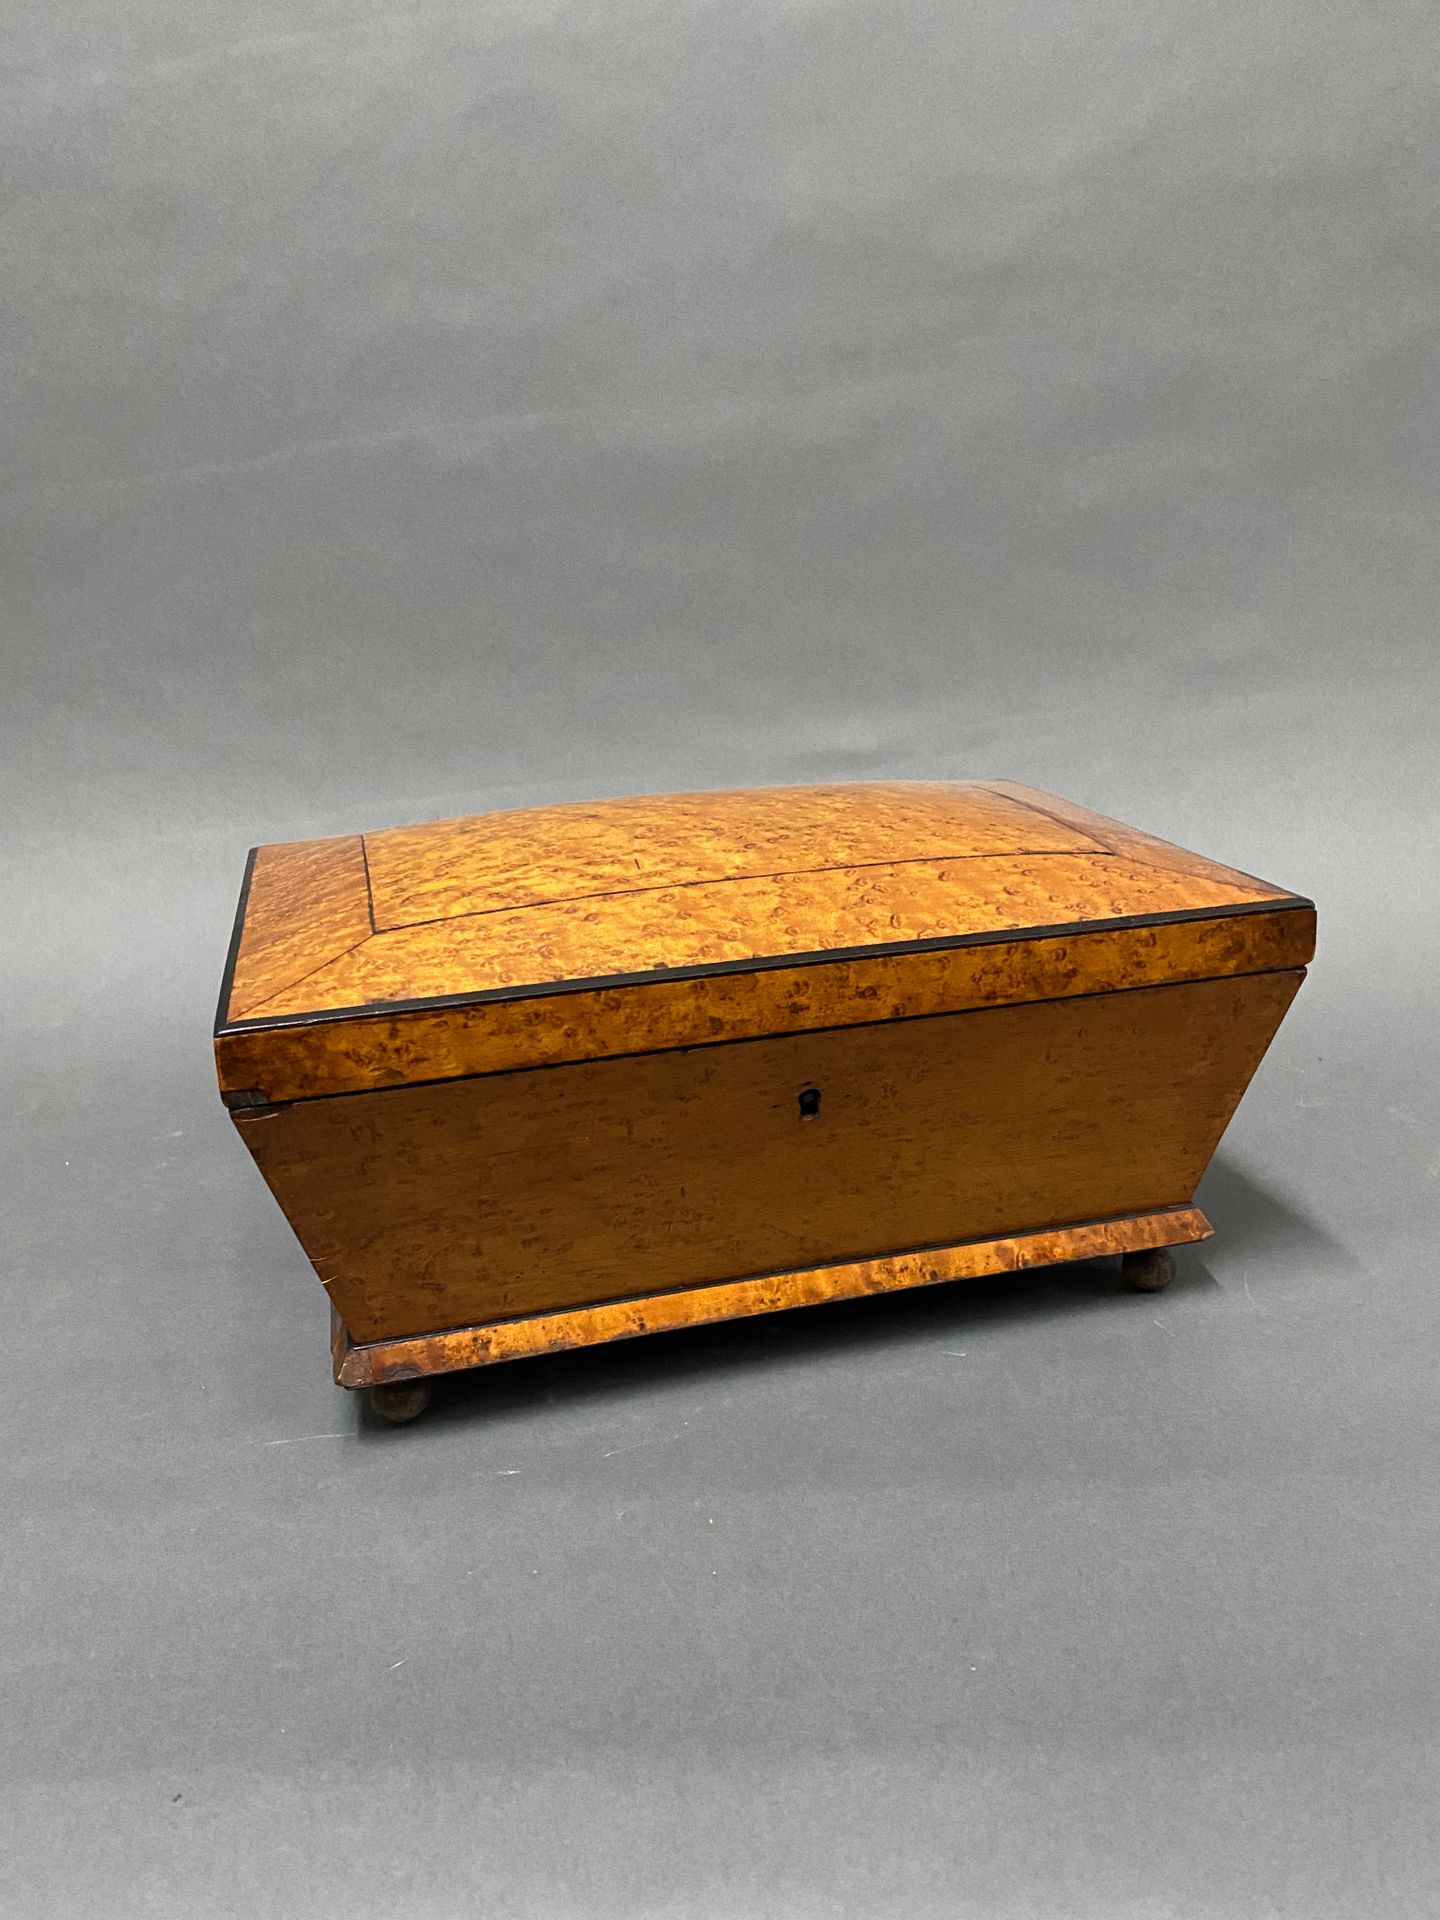 Null 浅色木头的墓碑形盒子

查理十世时期

高：16 - 宽：32 - 深：22.5厘米